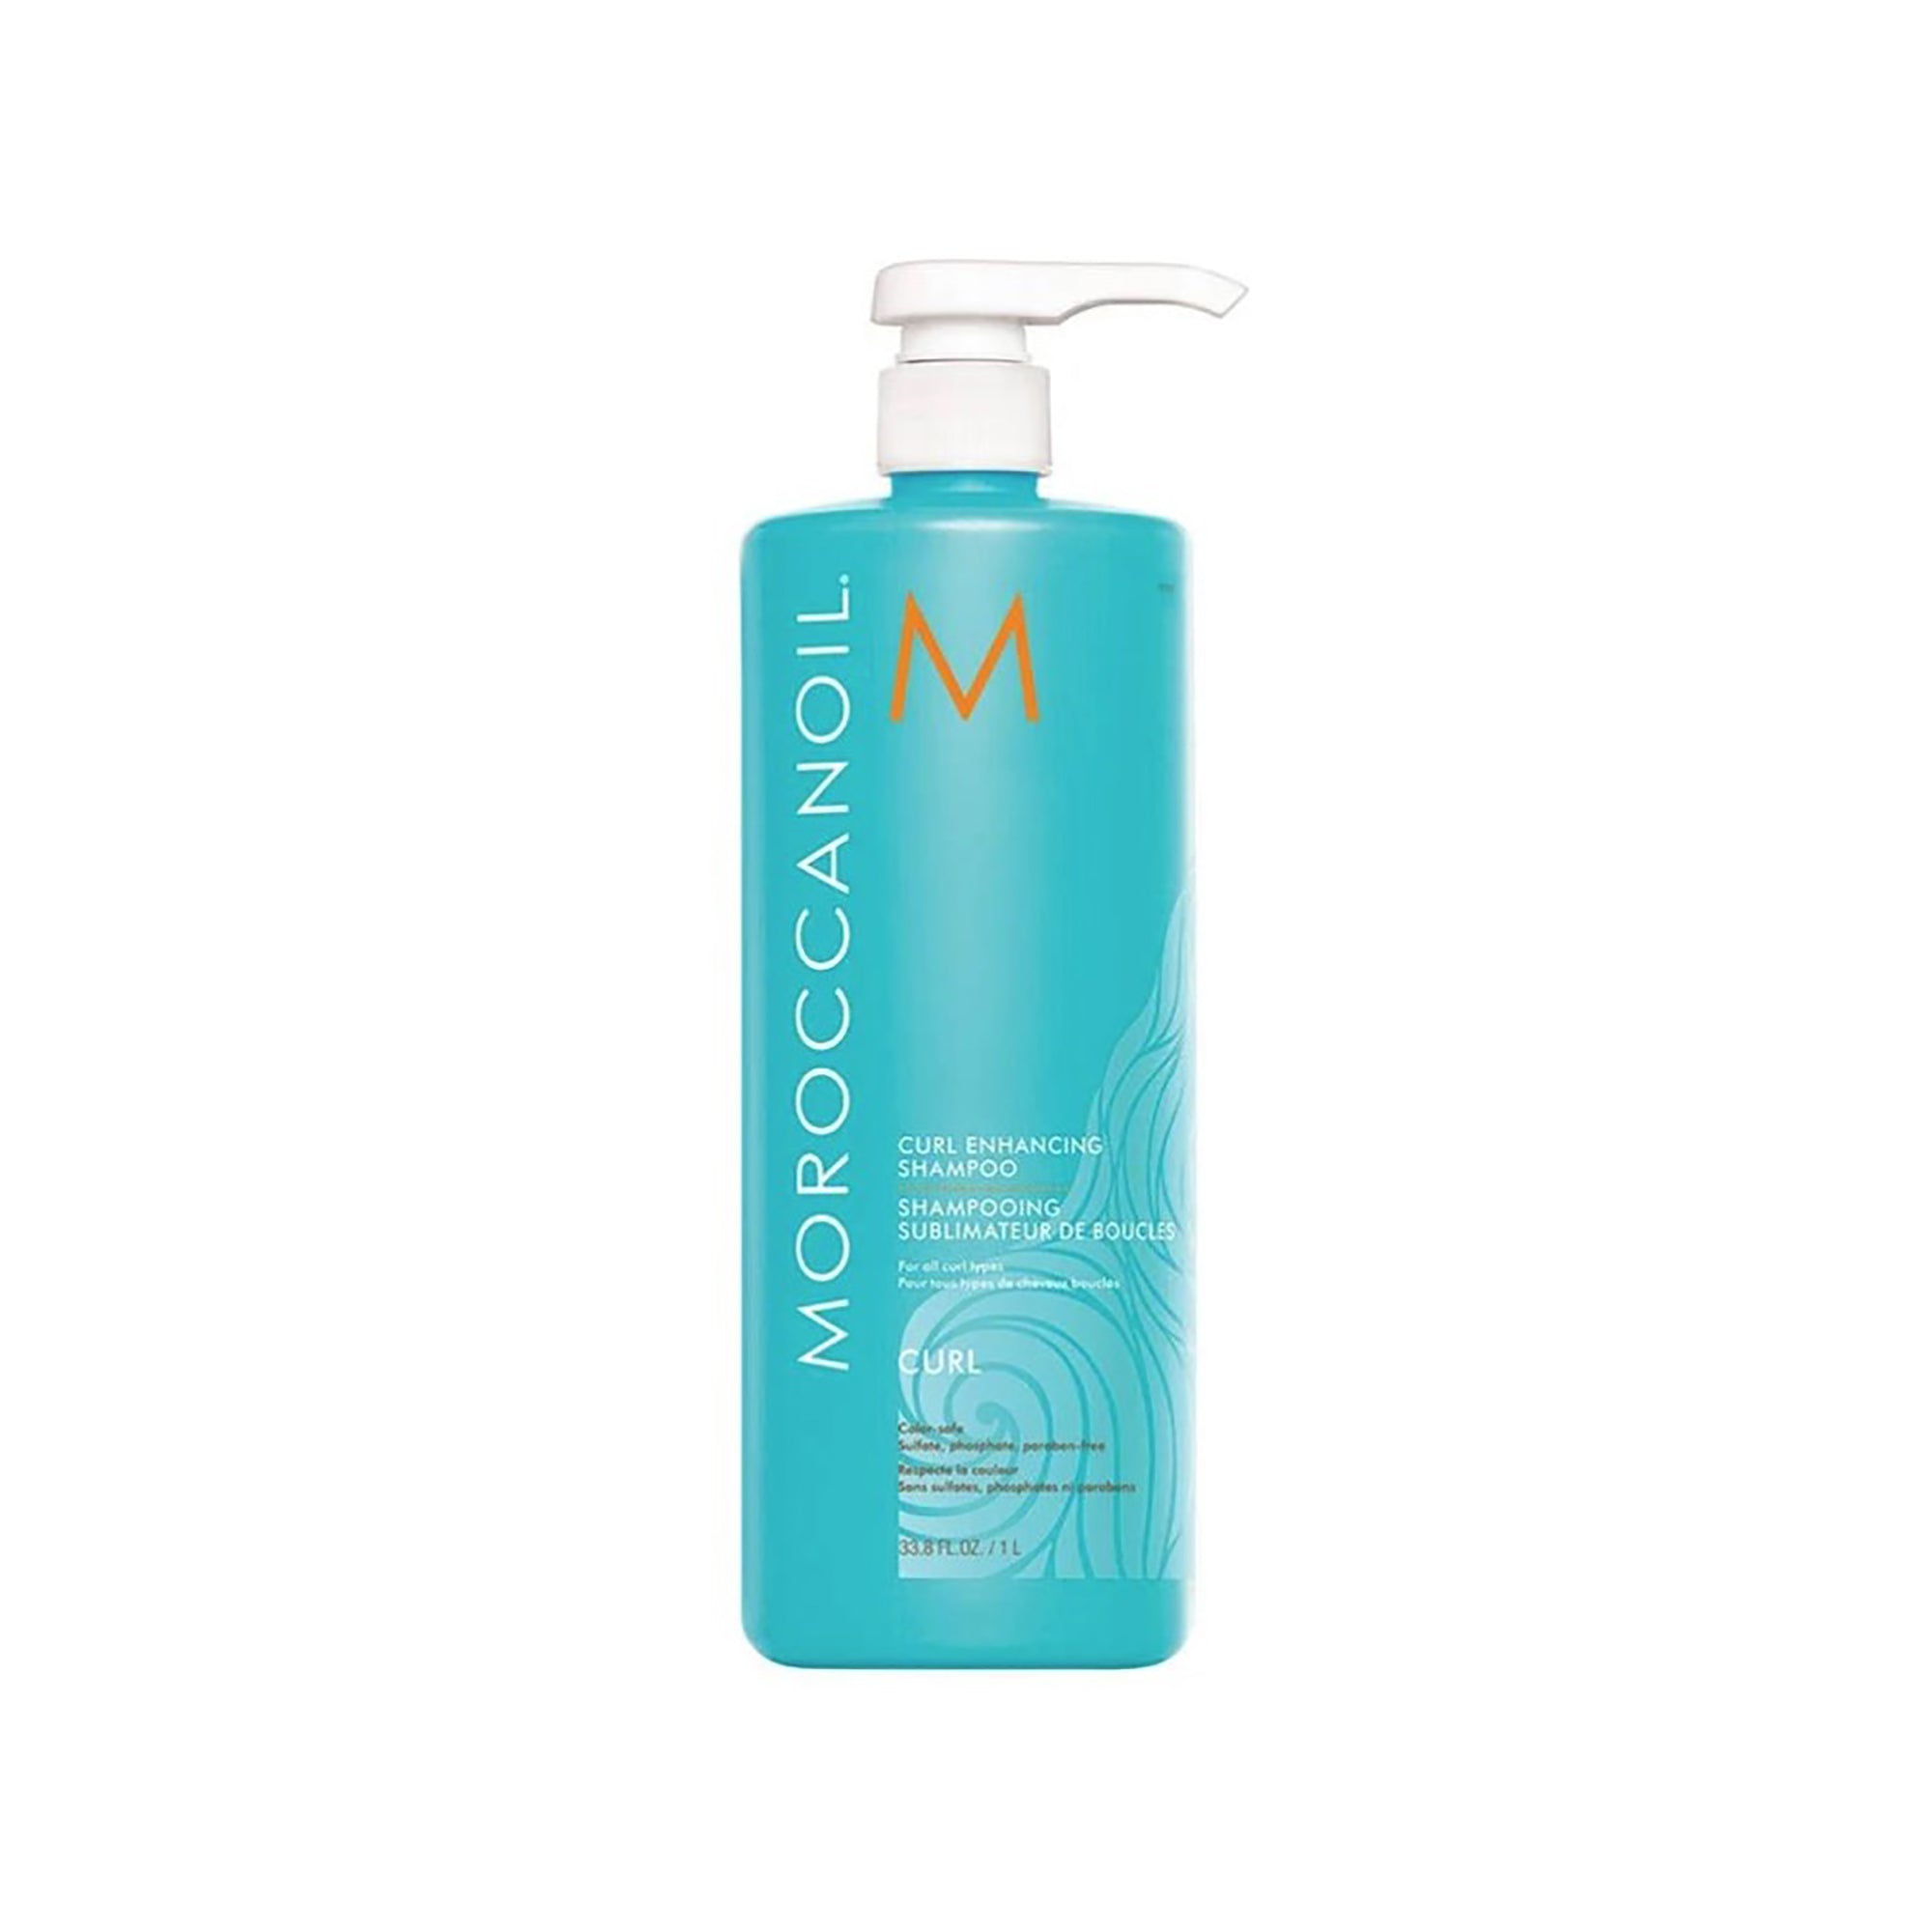 MoroccanOil Curl Enhancing Shampoo / 33OZ